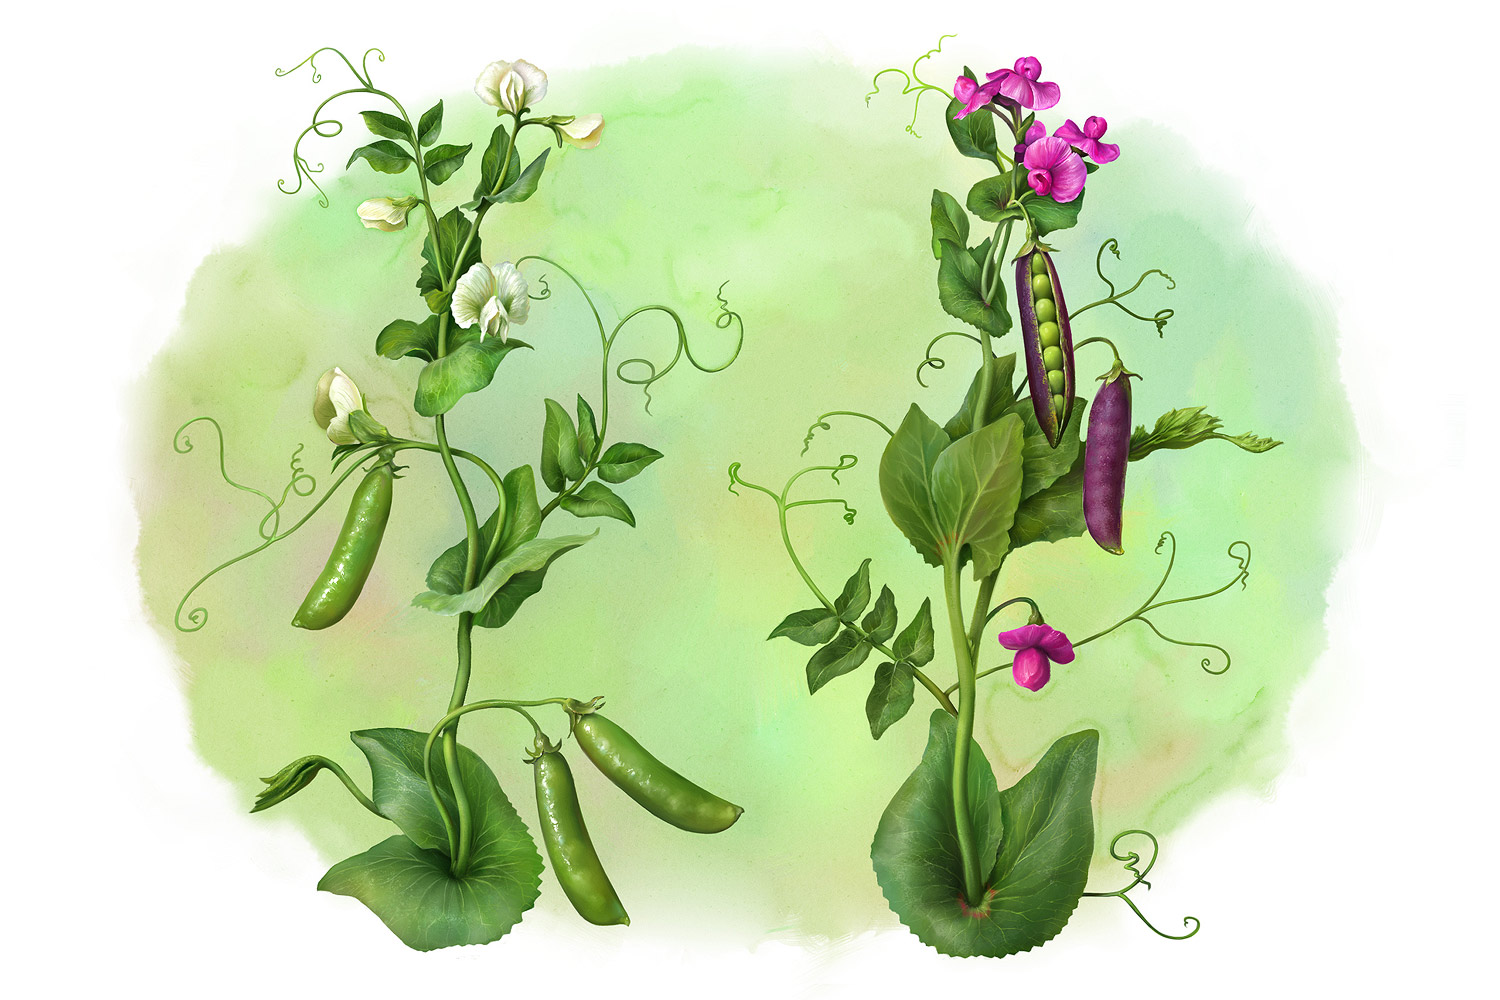 Eldar zakirov 2016   botanics. pea plants  1 